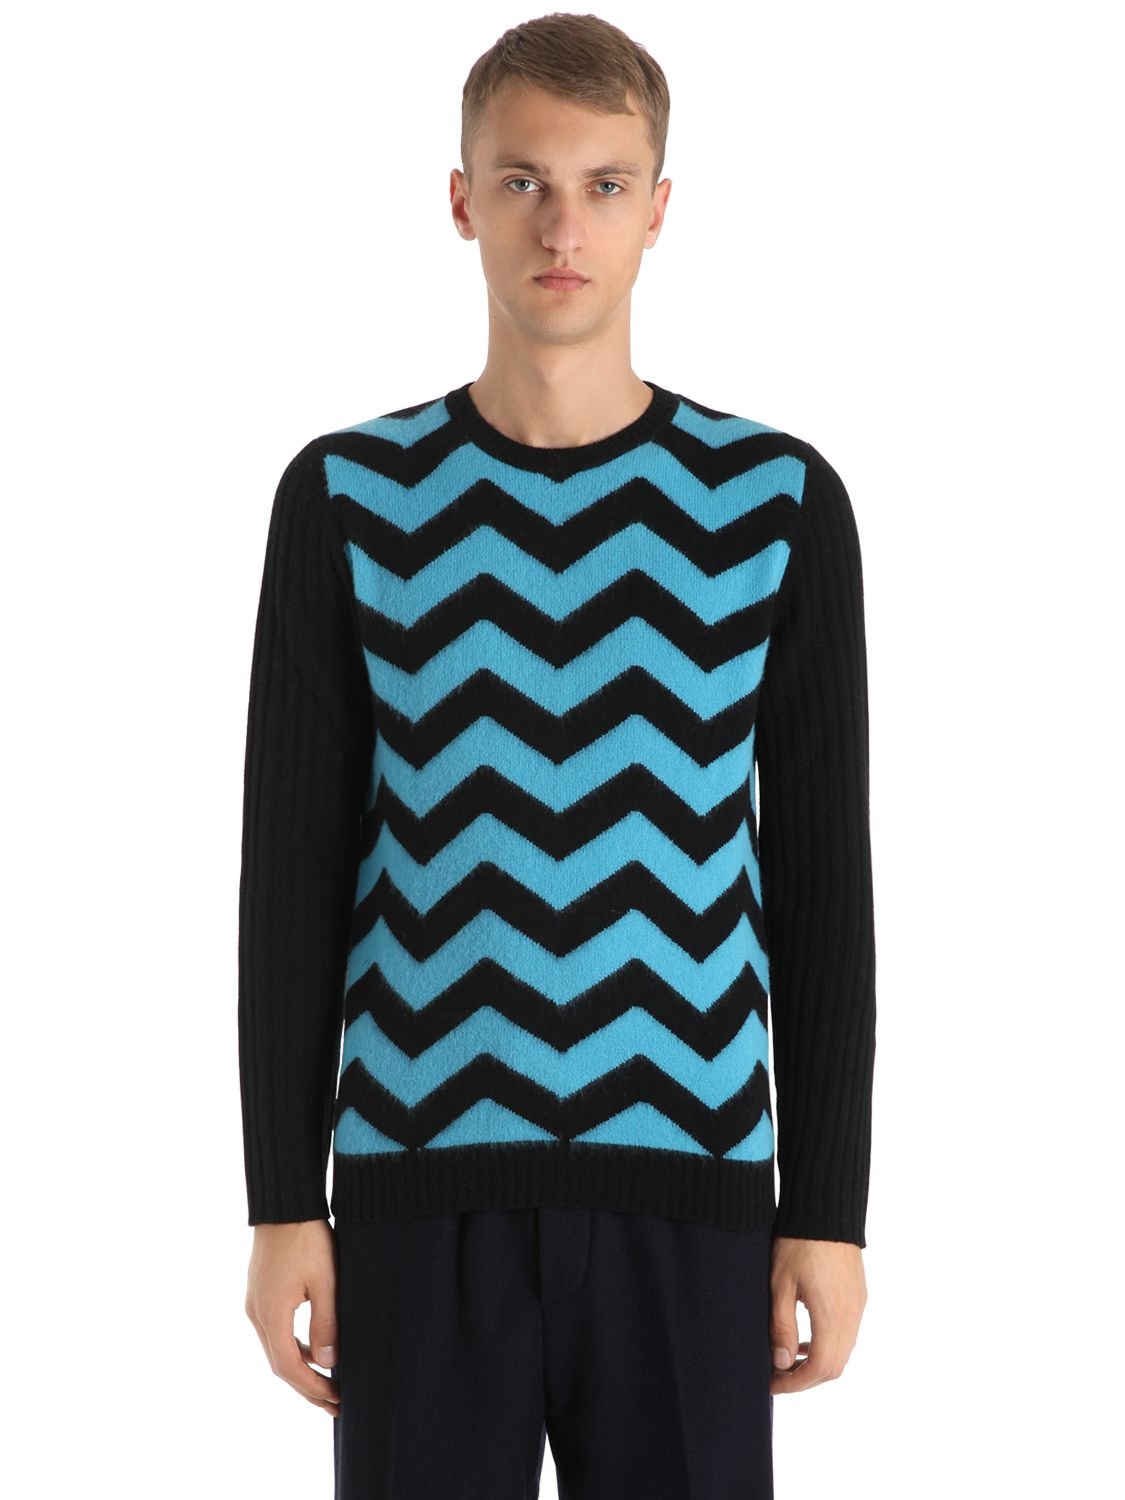 Mp Massimo Piombo Chevron Wool Knit Sweater In Sky Blue/black